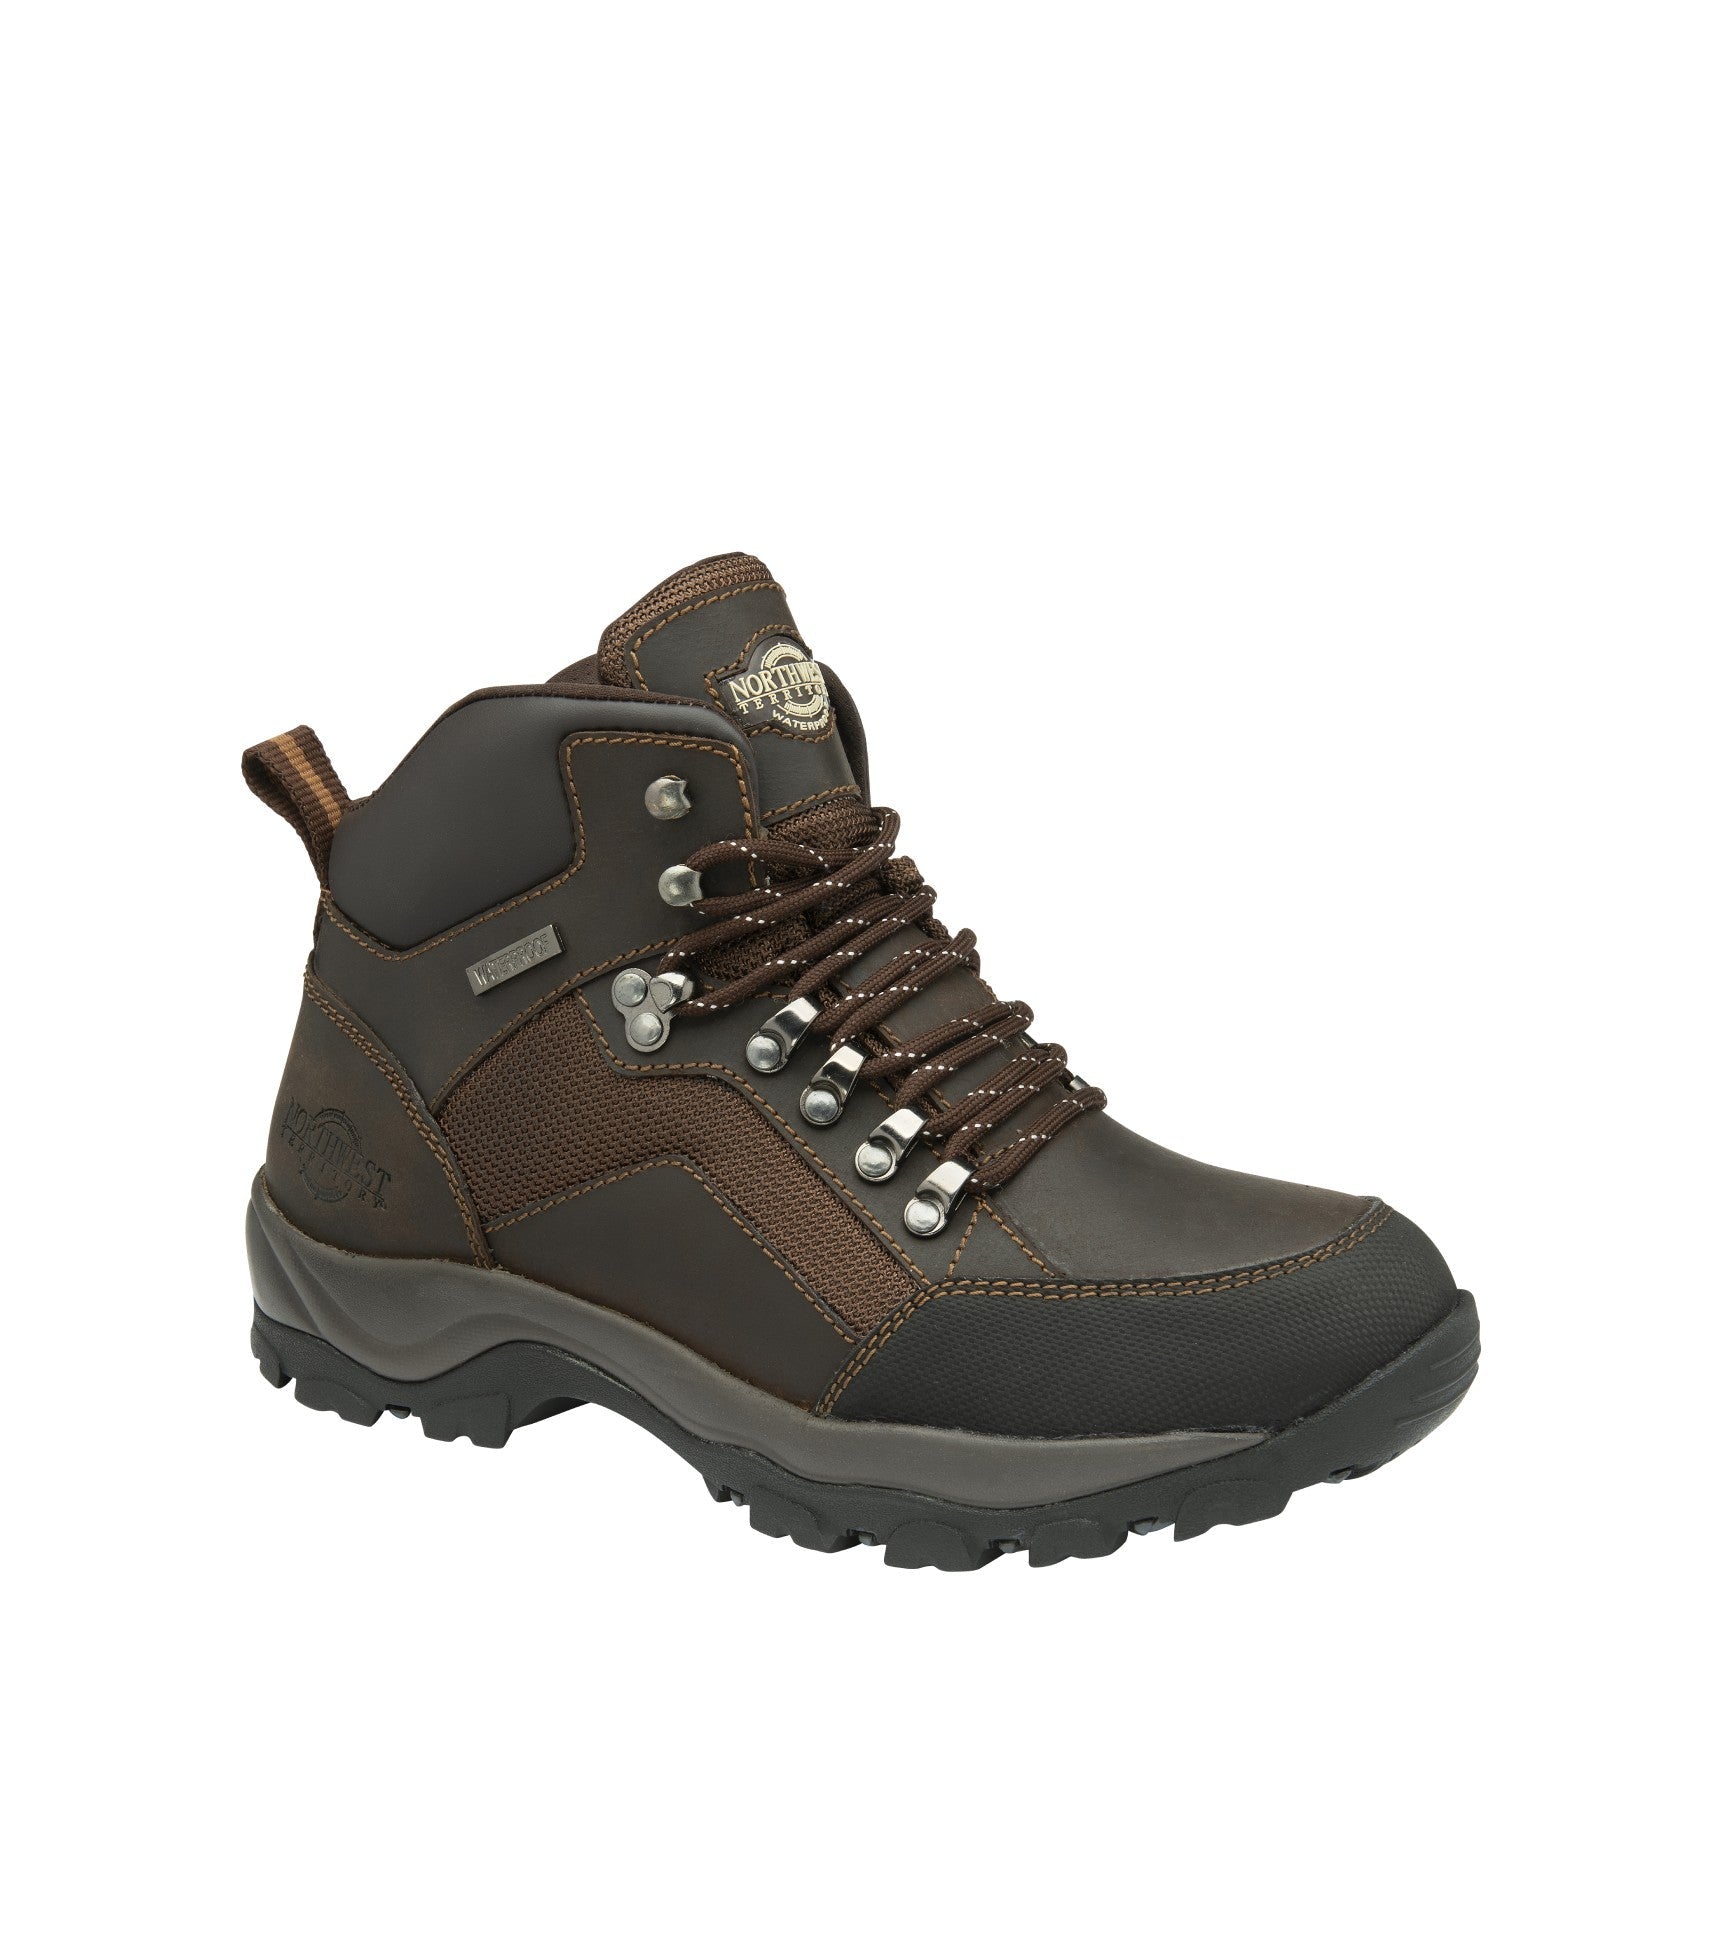 Men's Leather Waterproof Walking Boots - Men's Leather Waterproof Walking Boots